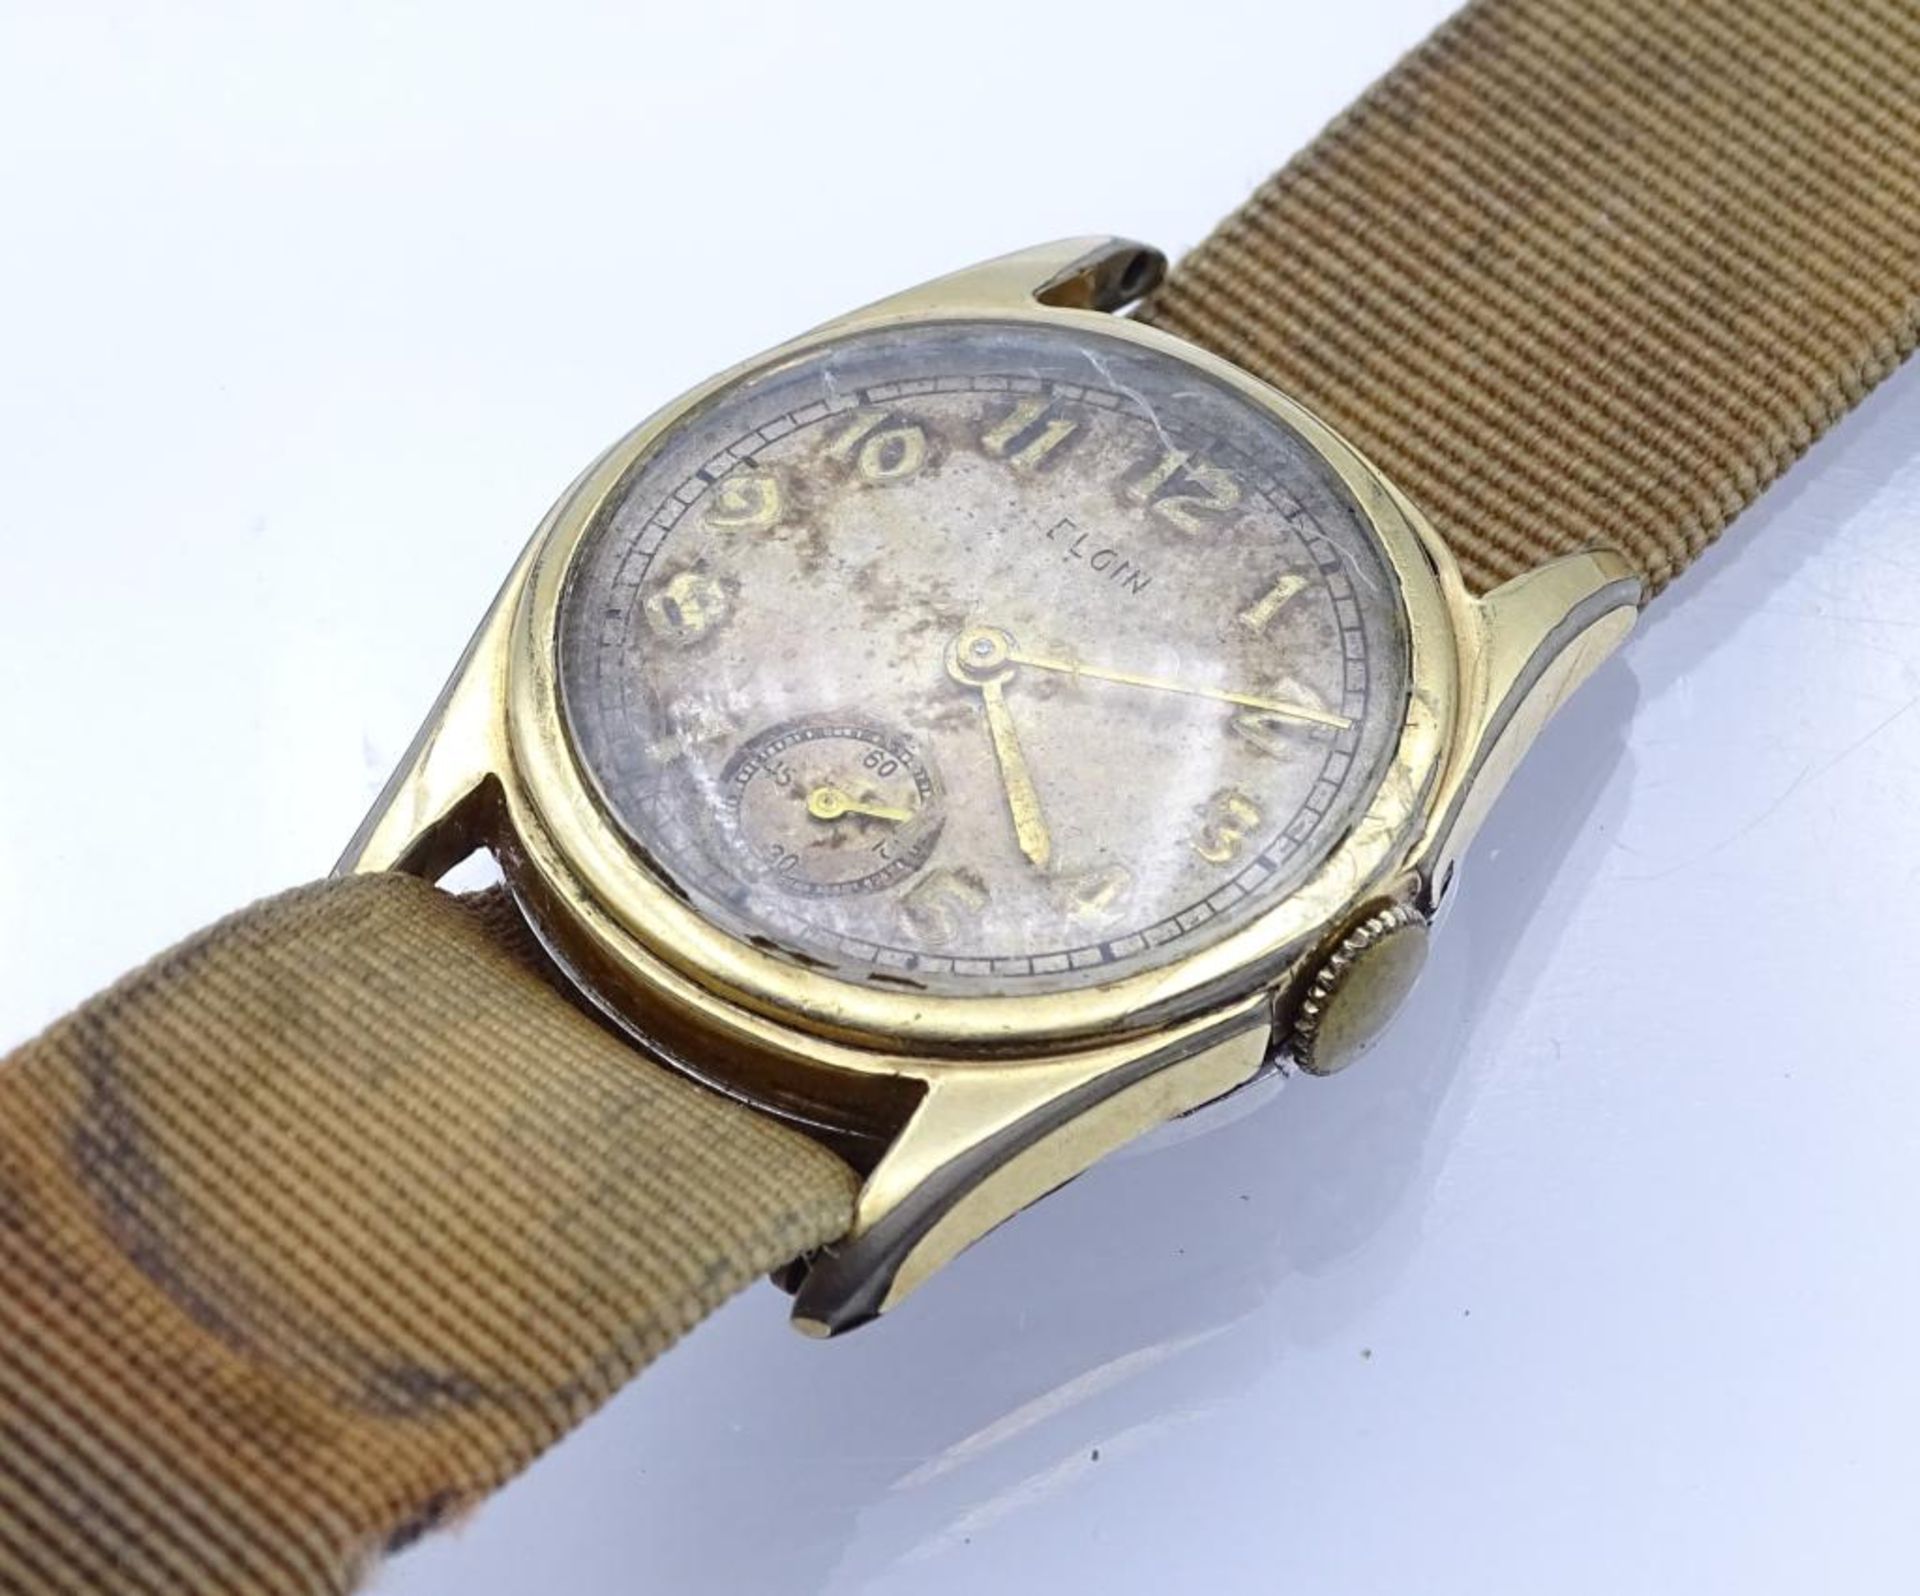 USA Militär Armbanduhr "ELGIN",Cal. 554, 1940, mechanisch,Werk steht,d- 2,6cm,Alters-u.